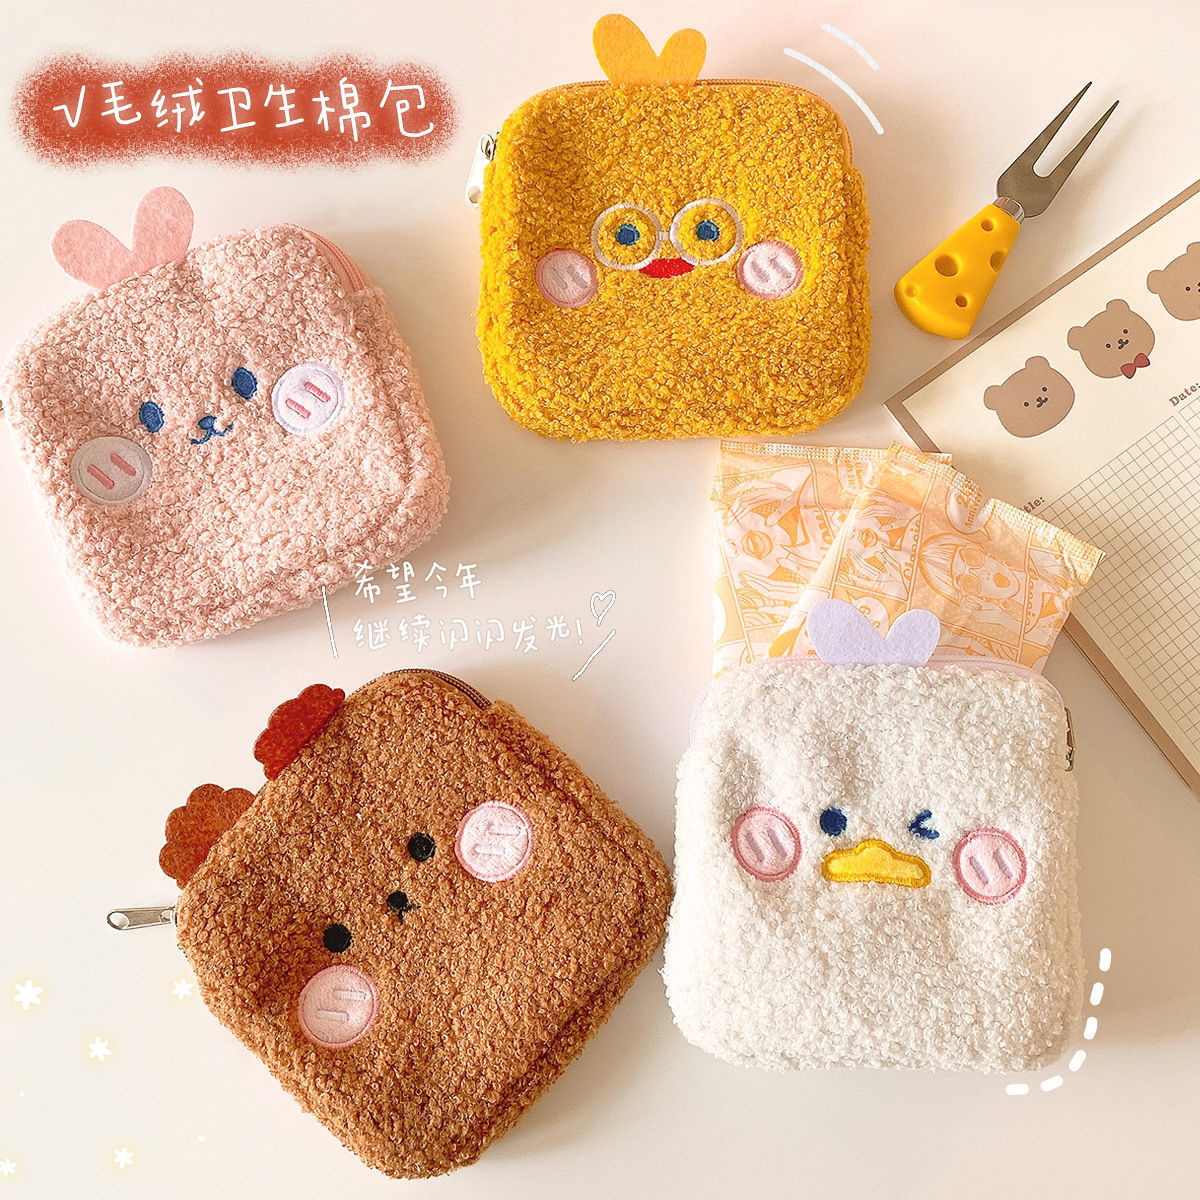 Cute Plush Sanitary Napkin Storage Bag Portable Girls' Heart Large Capacity Aunt Towel Storage Bag Student Monthly Bag